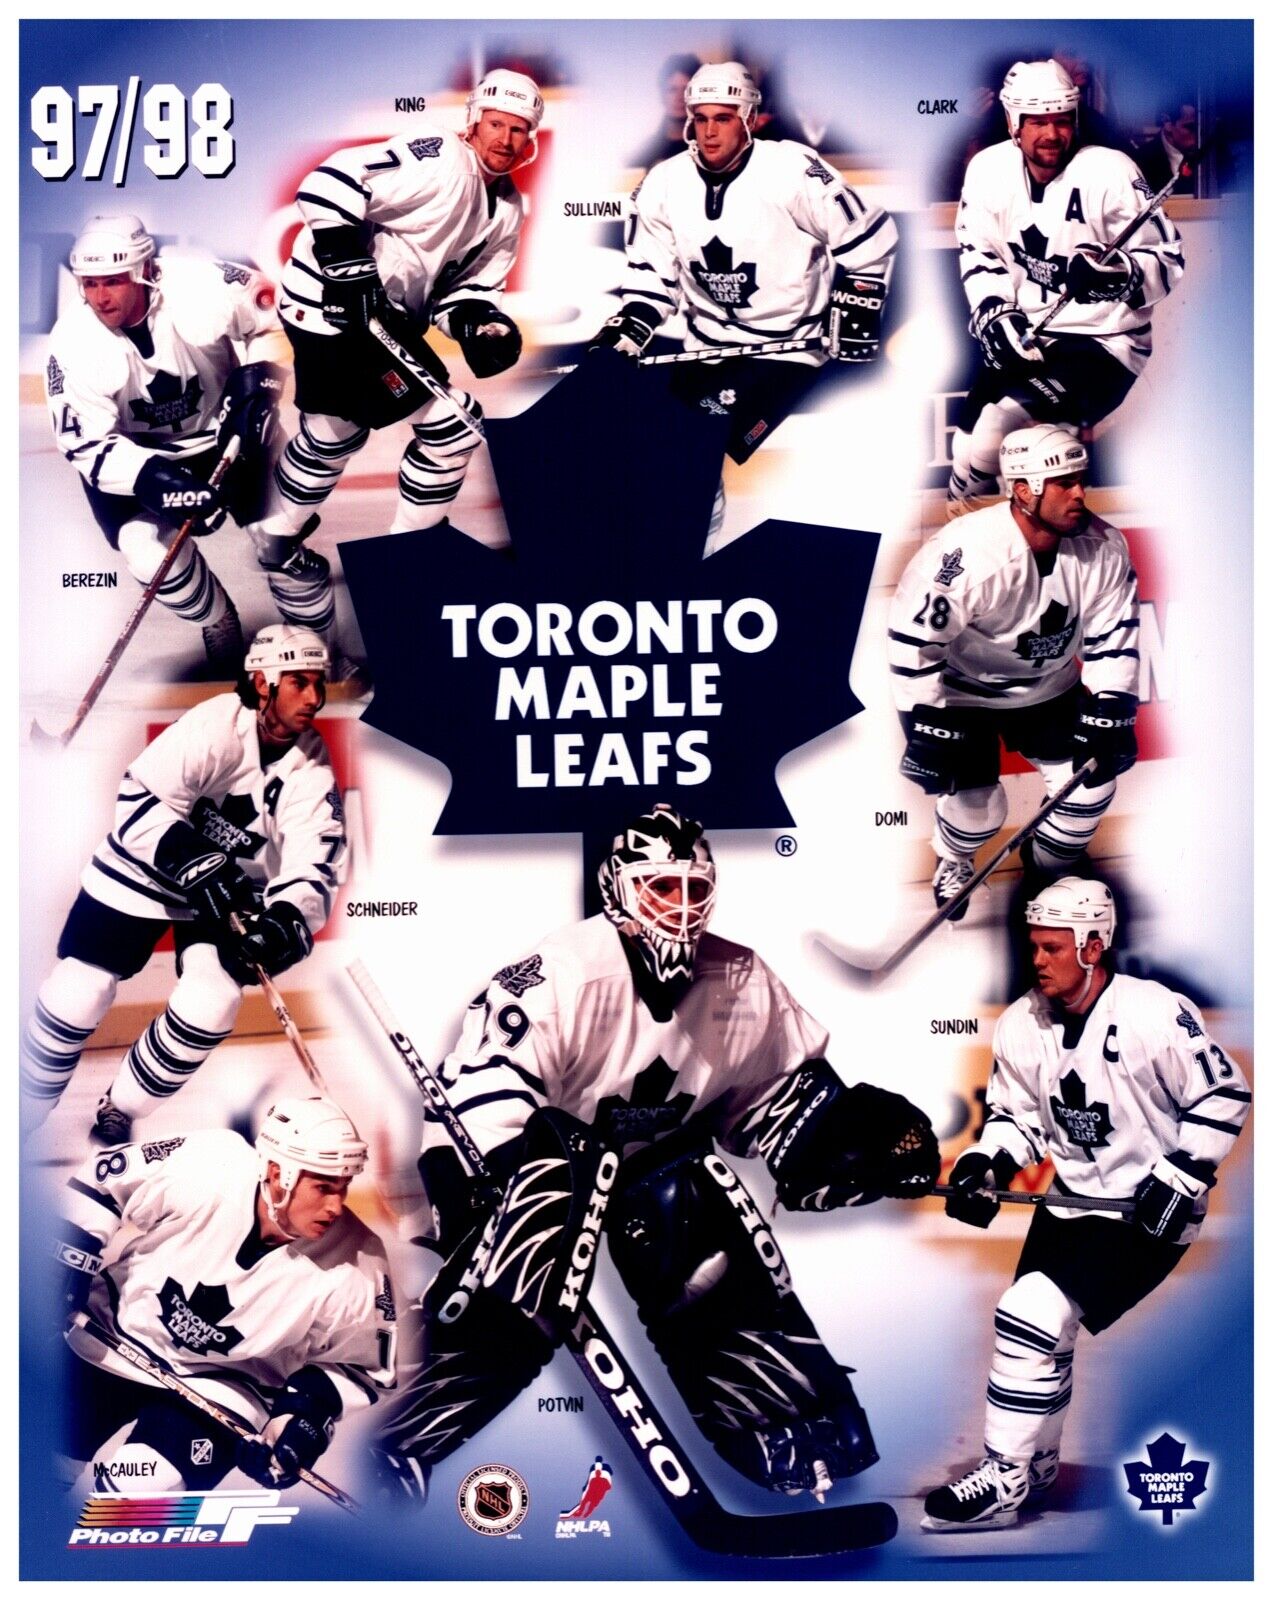 1997 / 1998 Toronto Maple Leafs Unsigned Team Composite Photo File 8x10 Photo